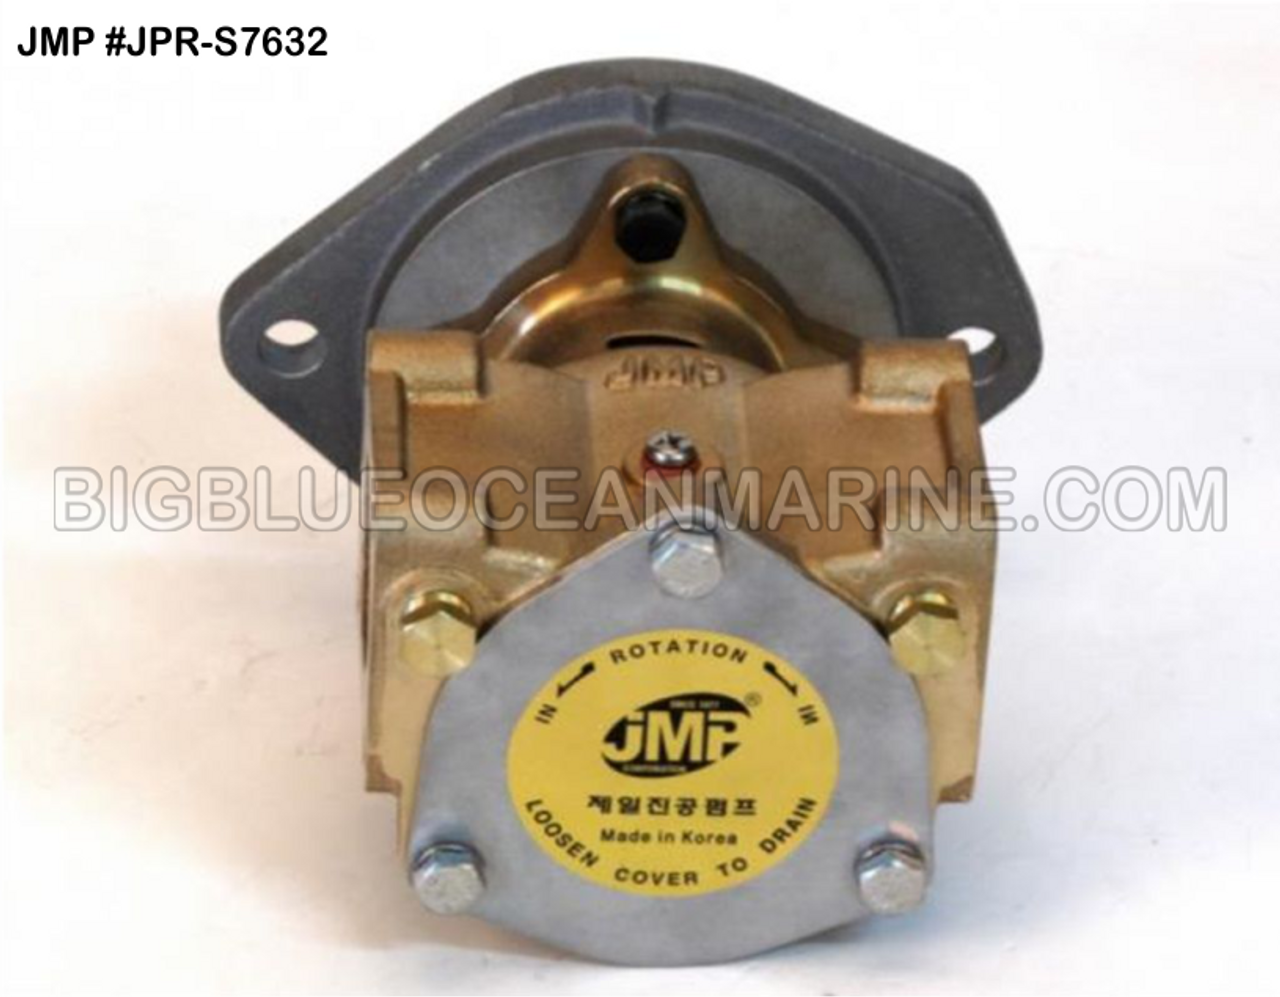 JMP #JPR-S7632
JMP CATERPILLAR REPLACEMENT RAW WATER ENGINE COOLING PUMP